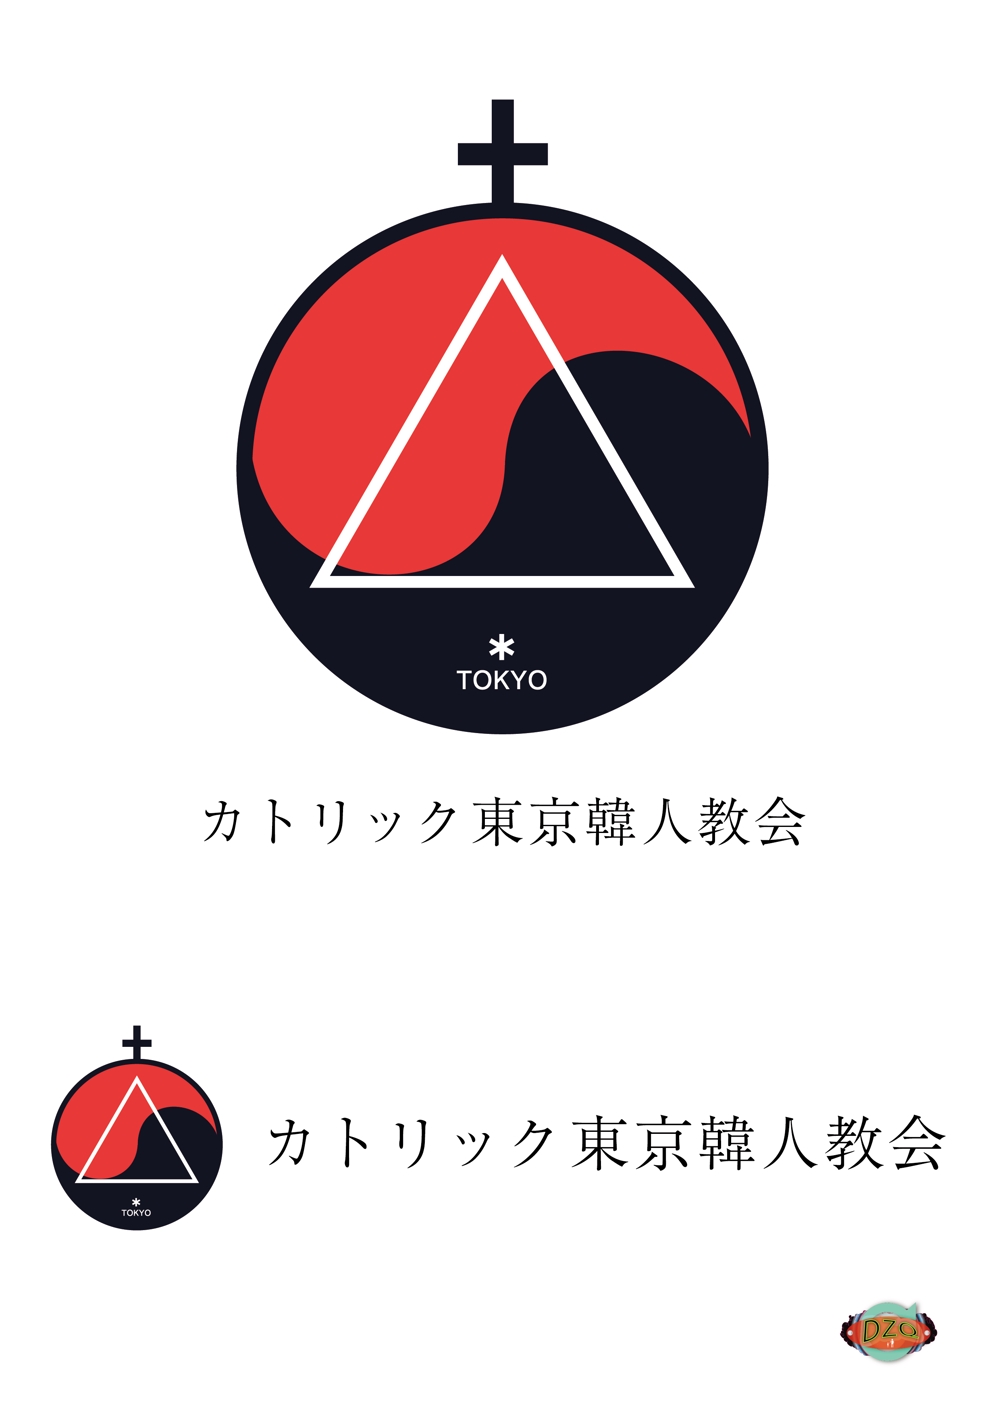 logo-kannjinkyoukai-2''.png